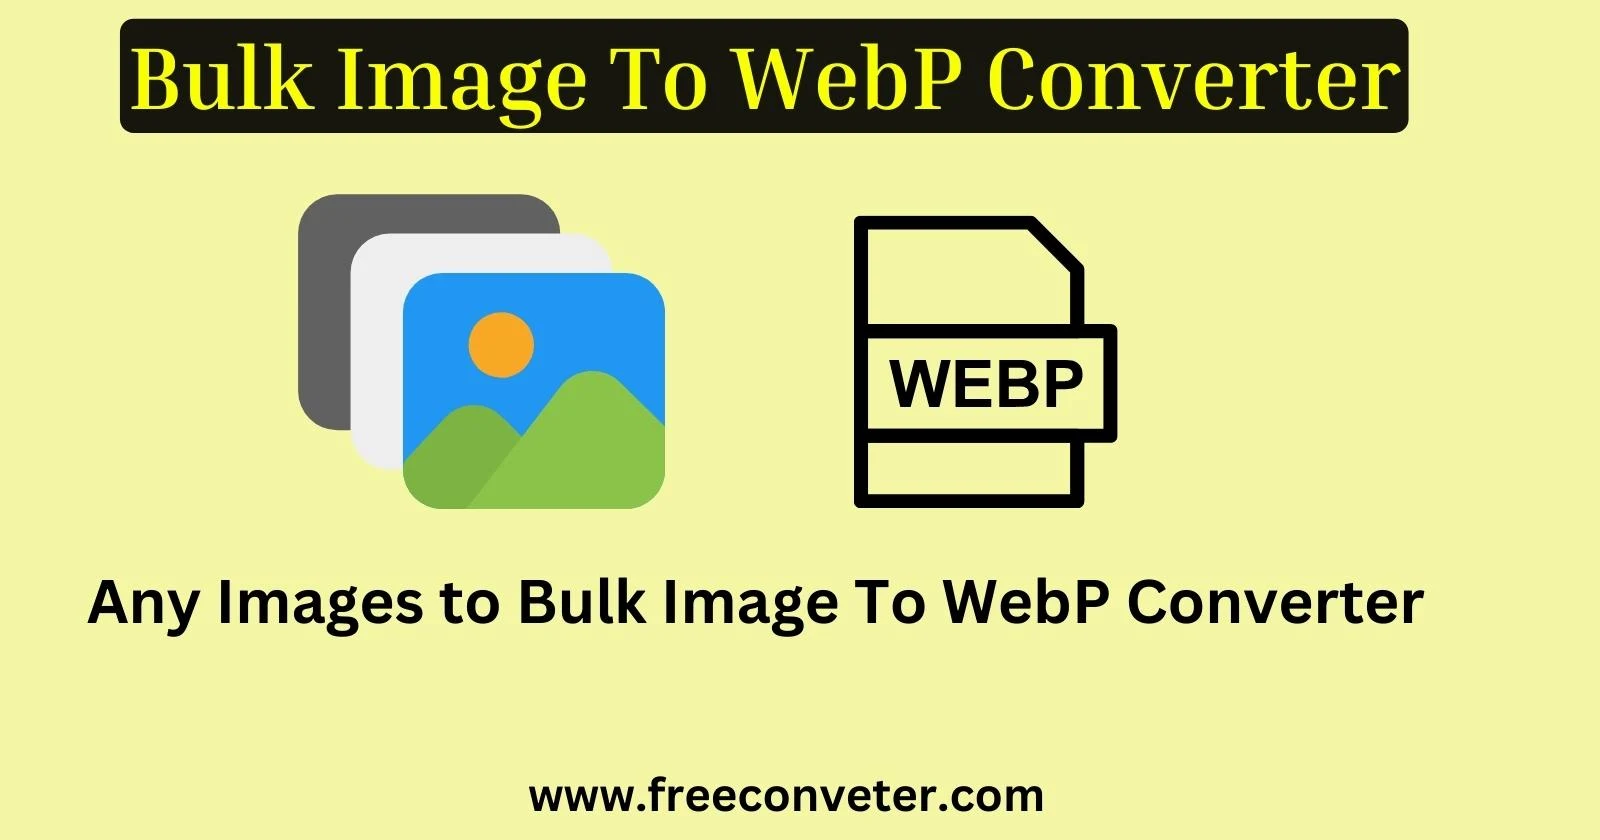 Bulk Image To WebP Converter